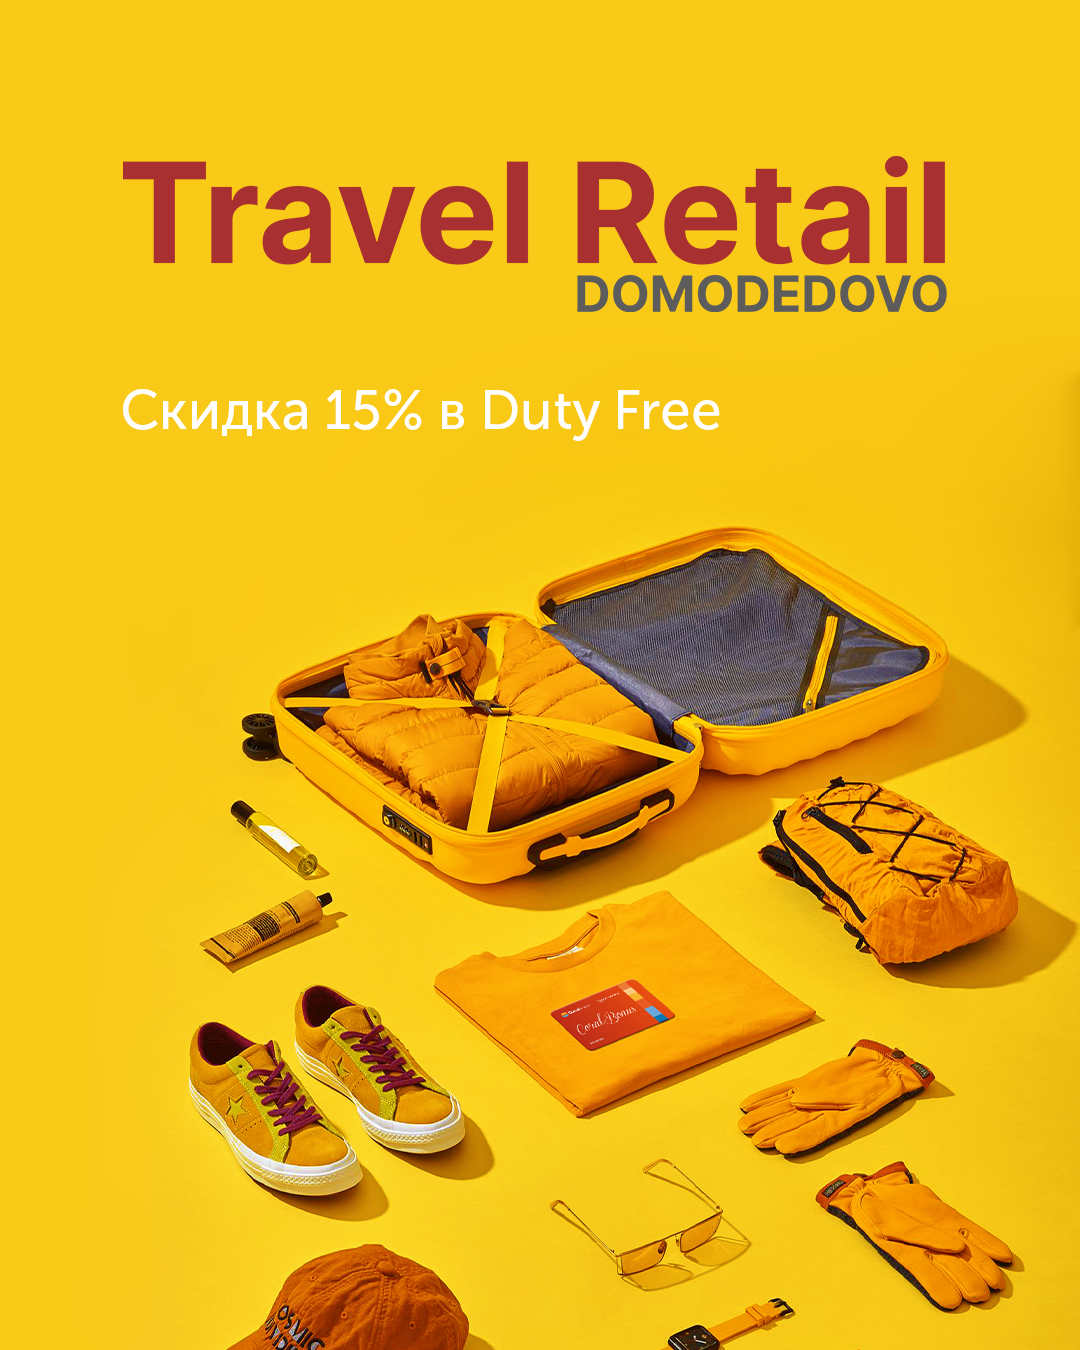 Travel Retail Domodedovo